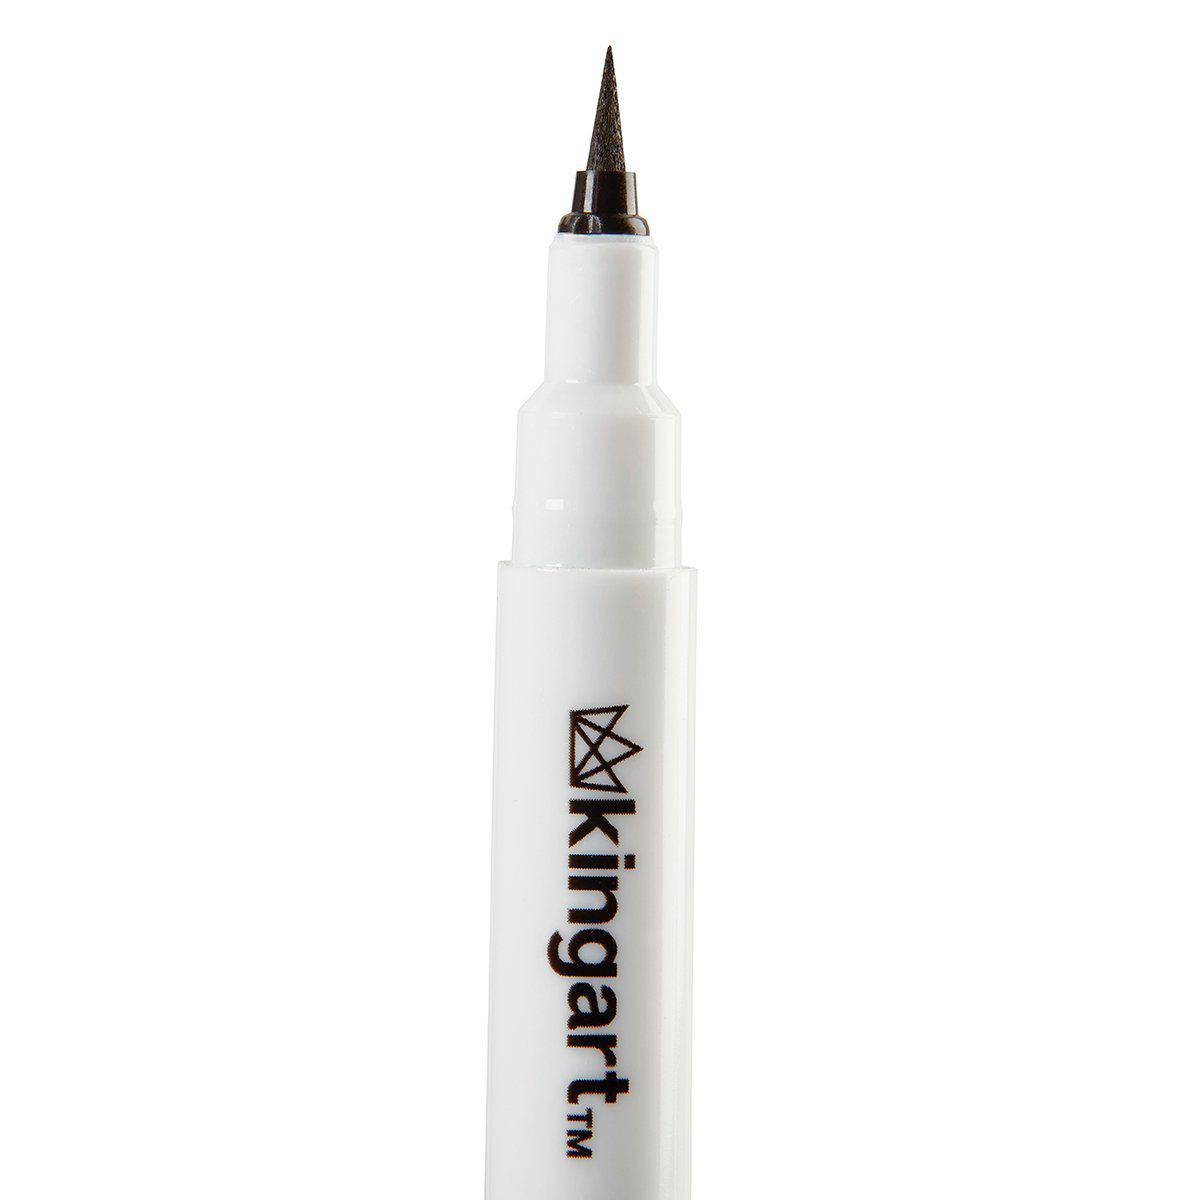 Kingart 8ct Inkline Fine Line Size 08 Pen Set - Pro Level